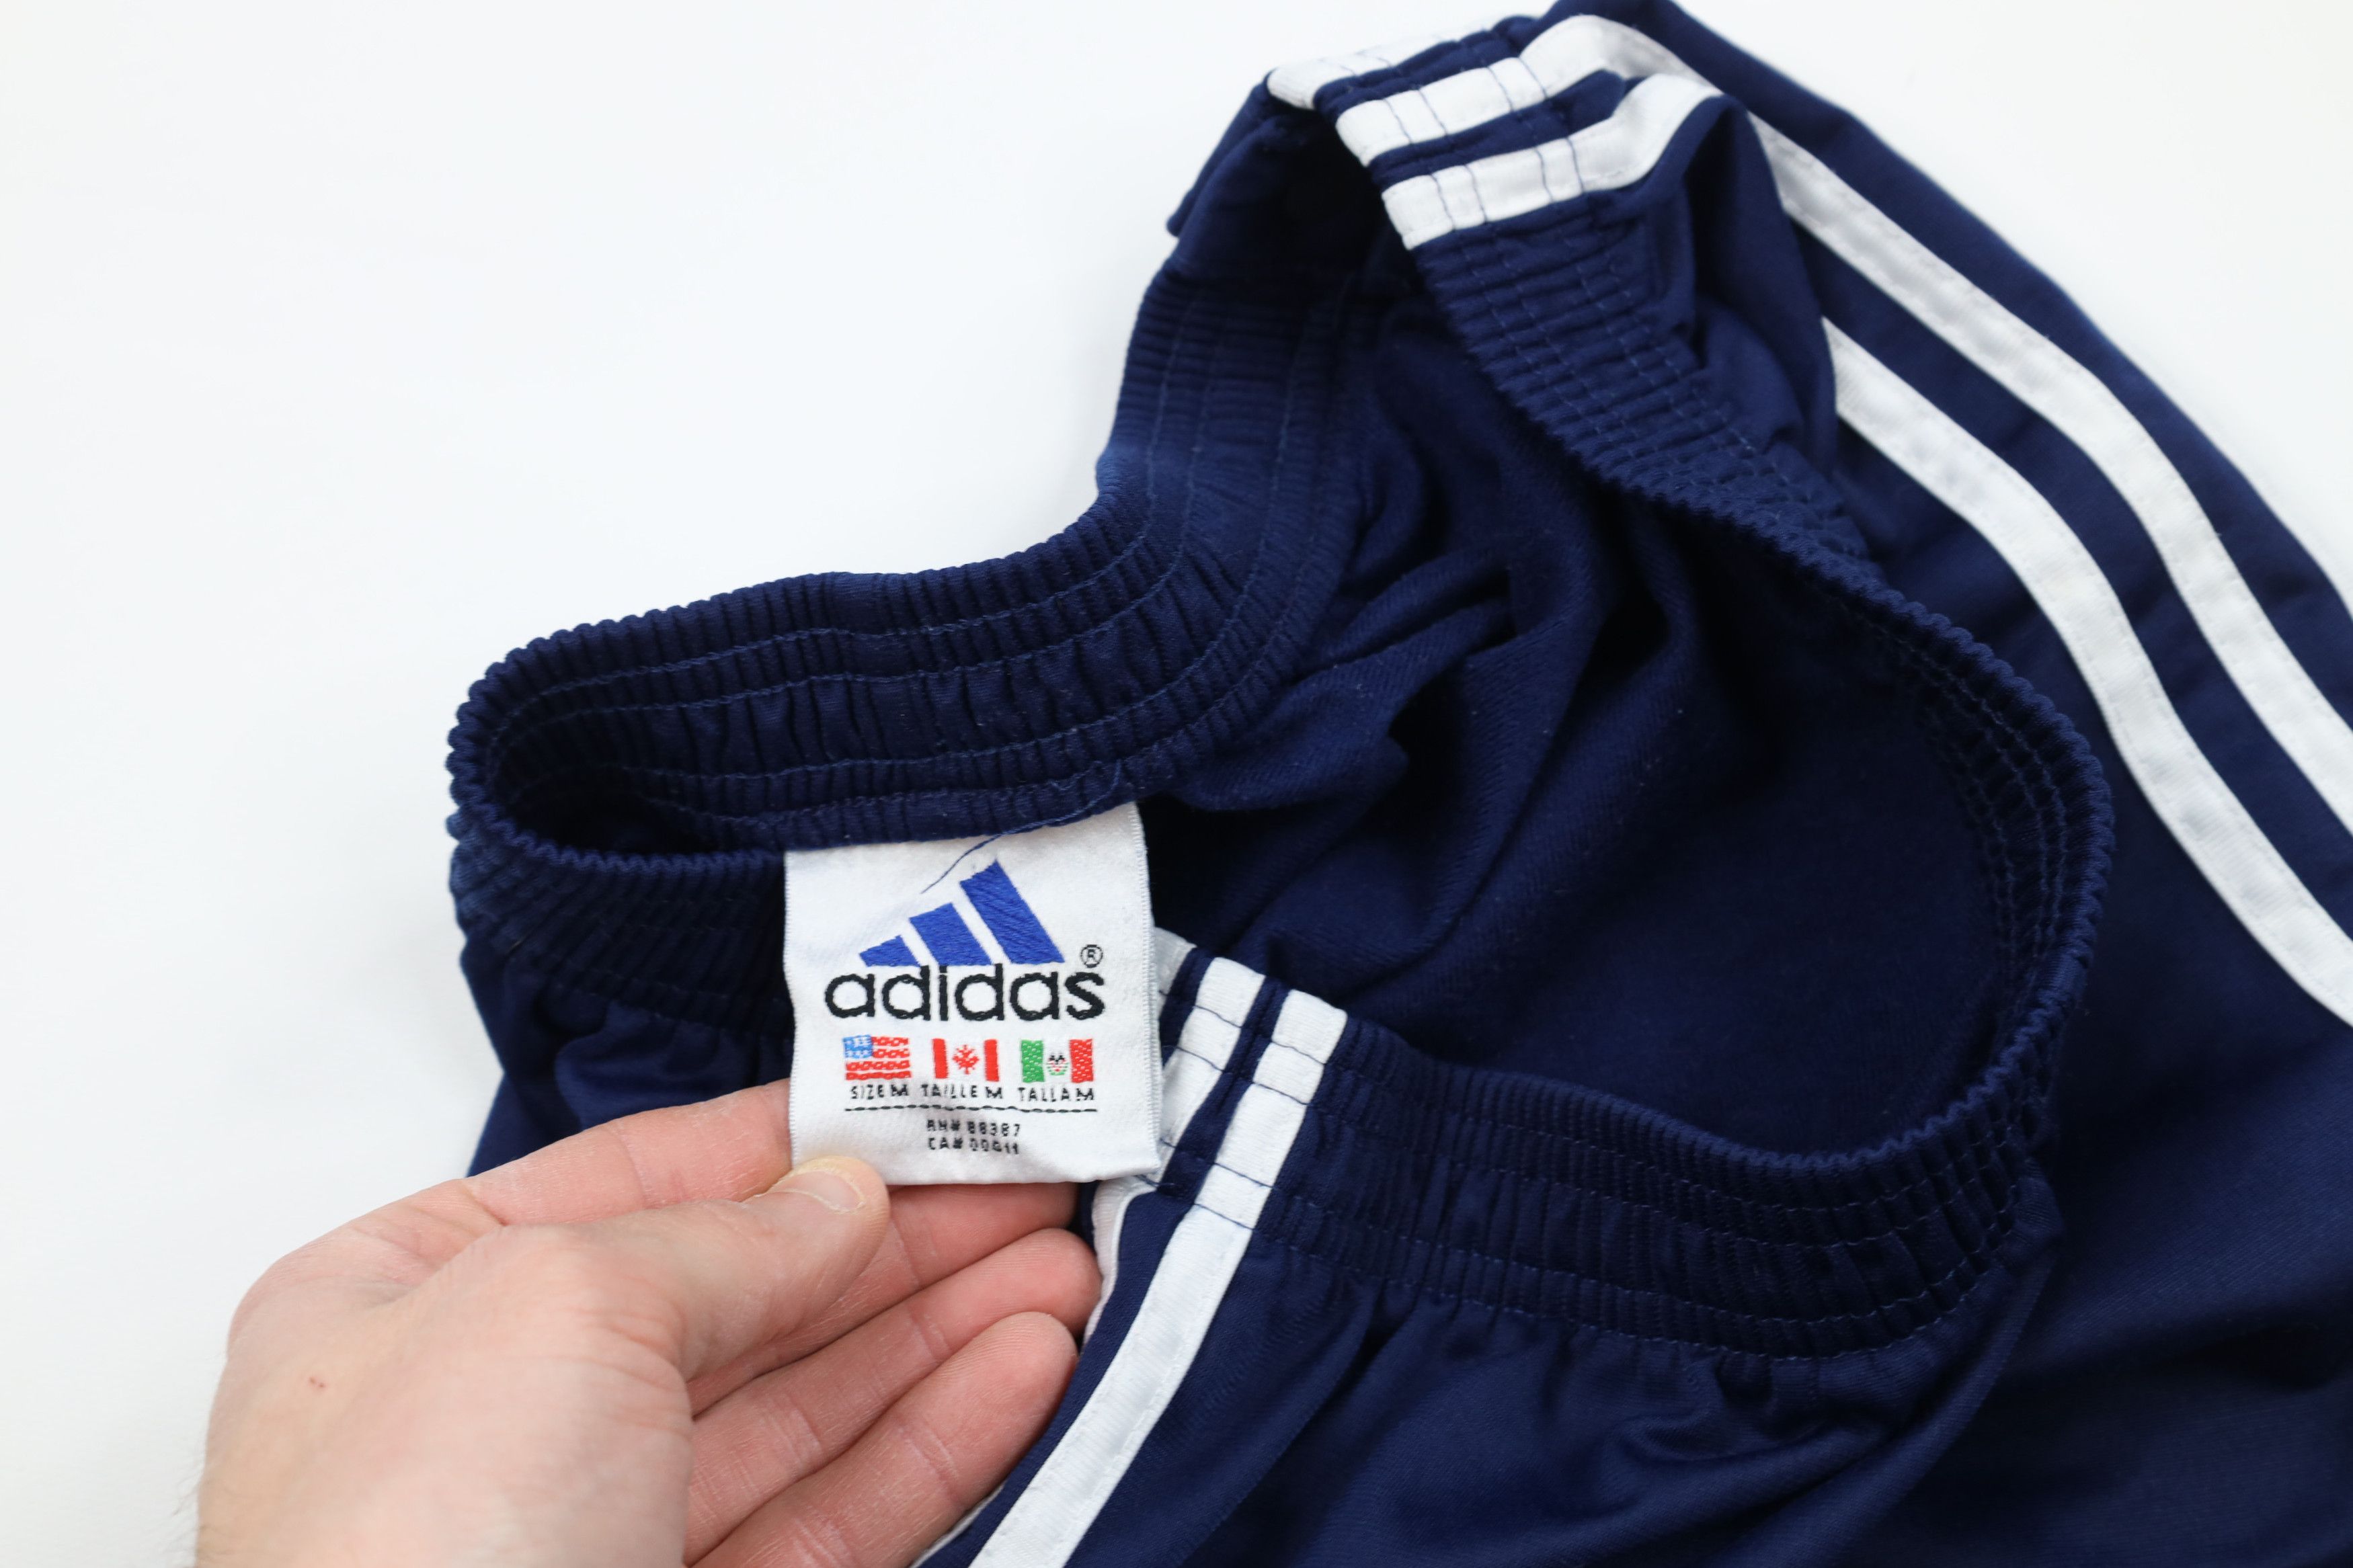 Adidas Vintage 90s Adidas Striped Tearaway Sweatpants Pants Blue Size US 34 / EU 50 - 7 Thumbnail